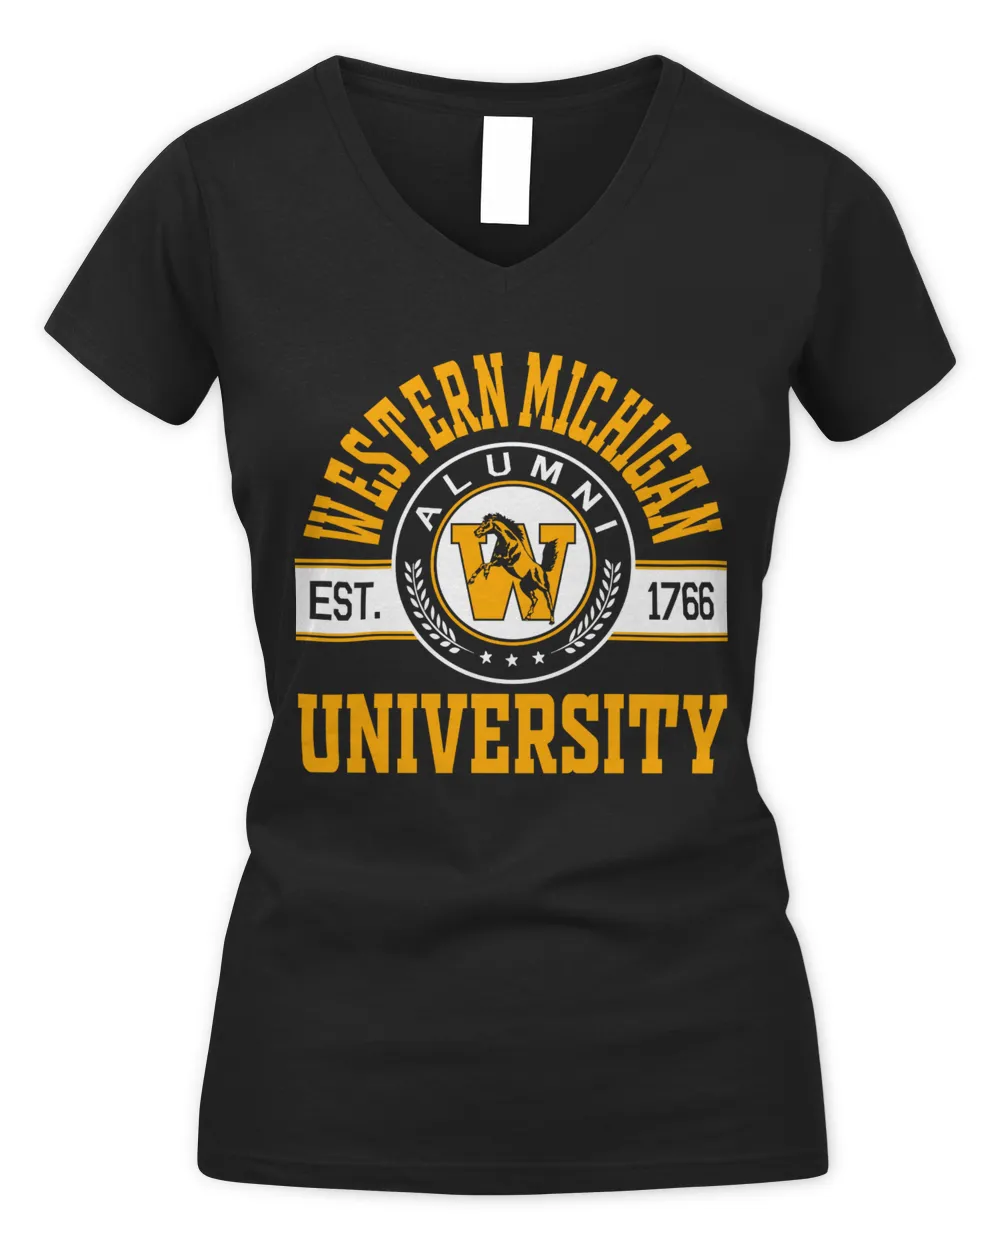 Western Michigan University Lgo 02